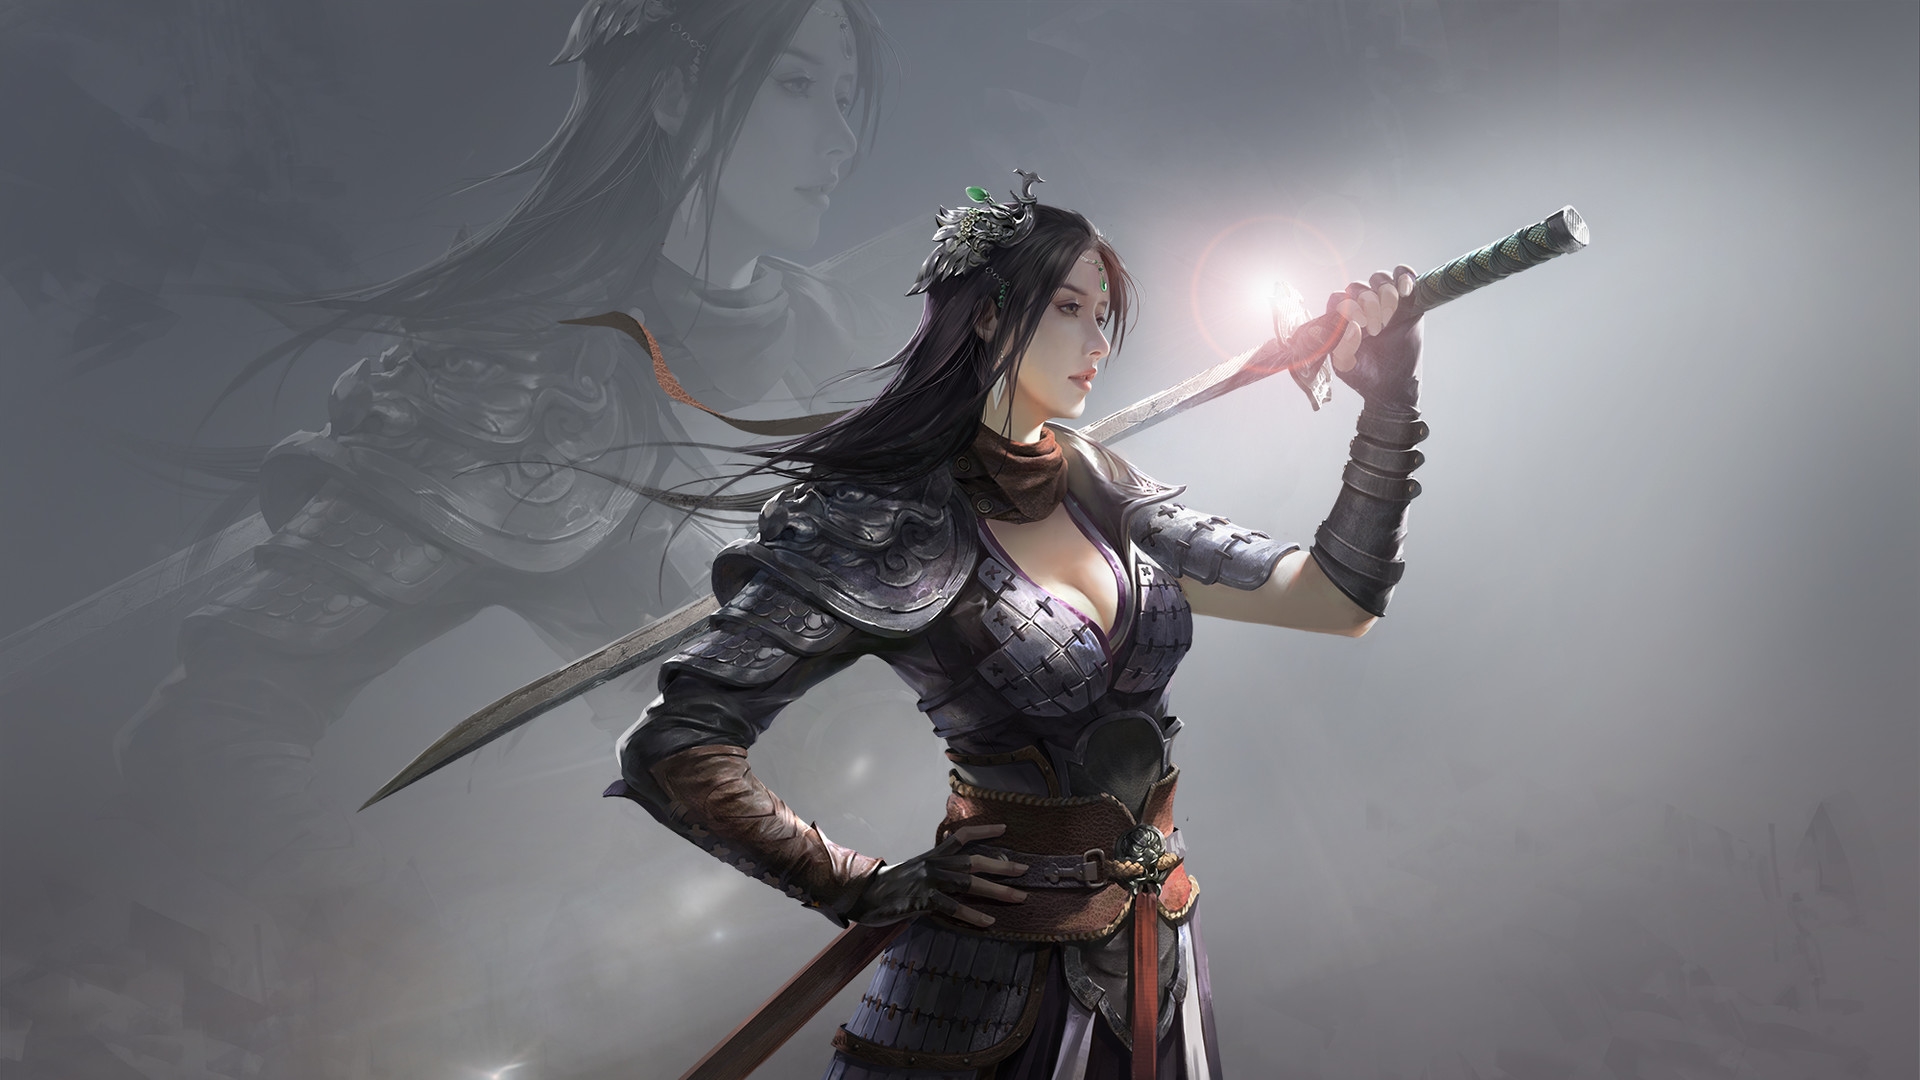 Anime 1920x1080 Wuxia xianxia women with swords sword artwork dark hair long hair fantasy art fantasy girl armor standing